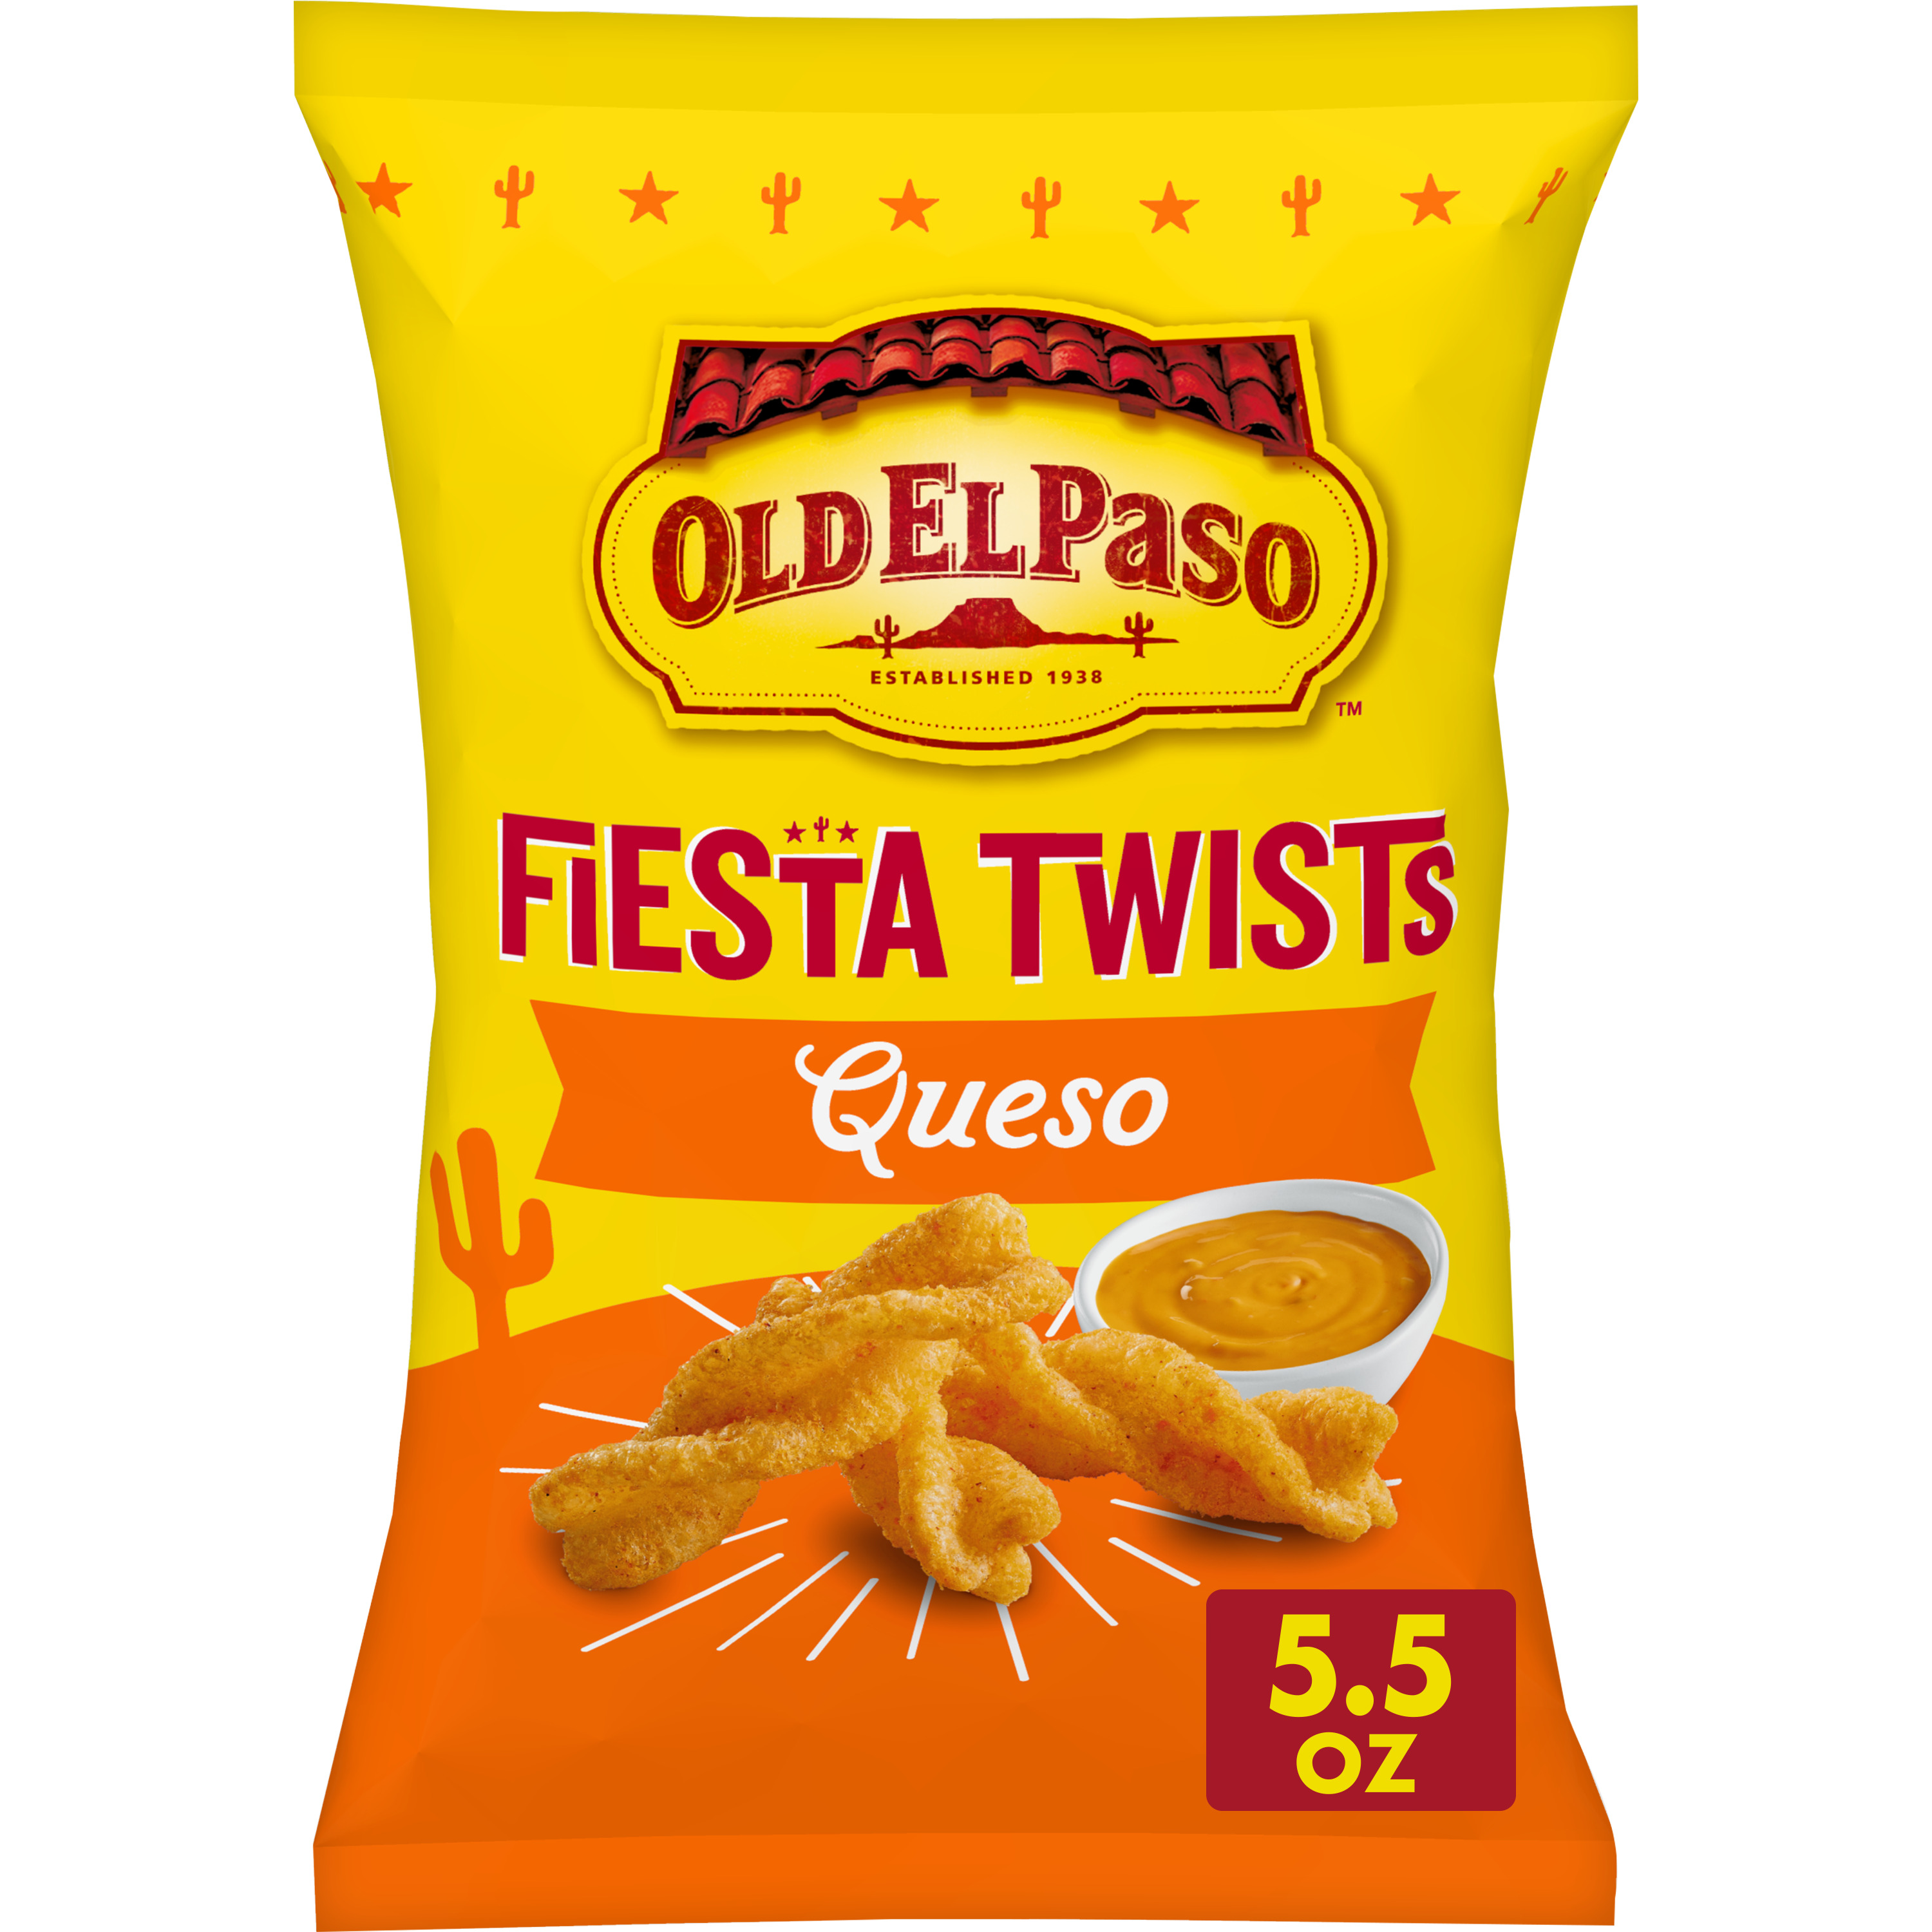 Old El Paso Fiesta Twists, Queso Cheese, Crispy Corn Snacks, 5.5 oz - image 1 of 10